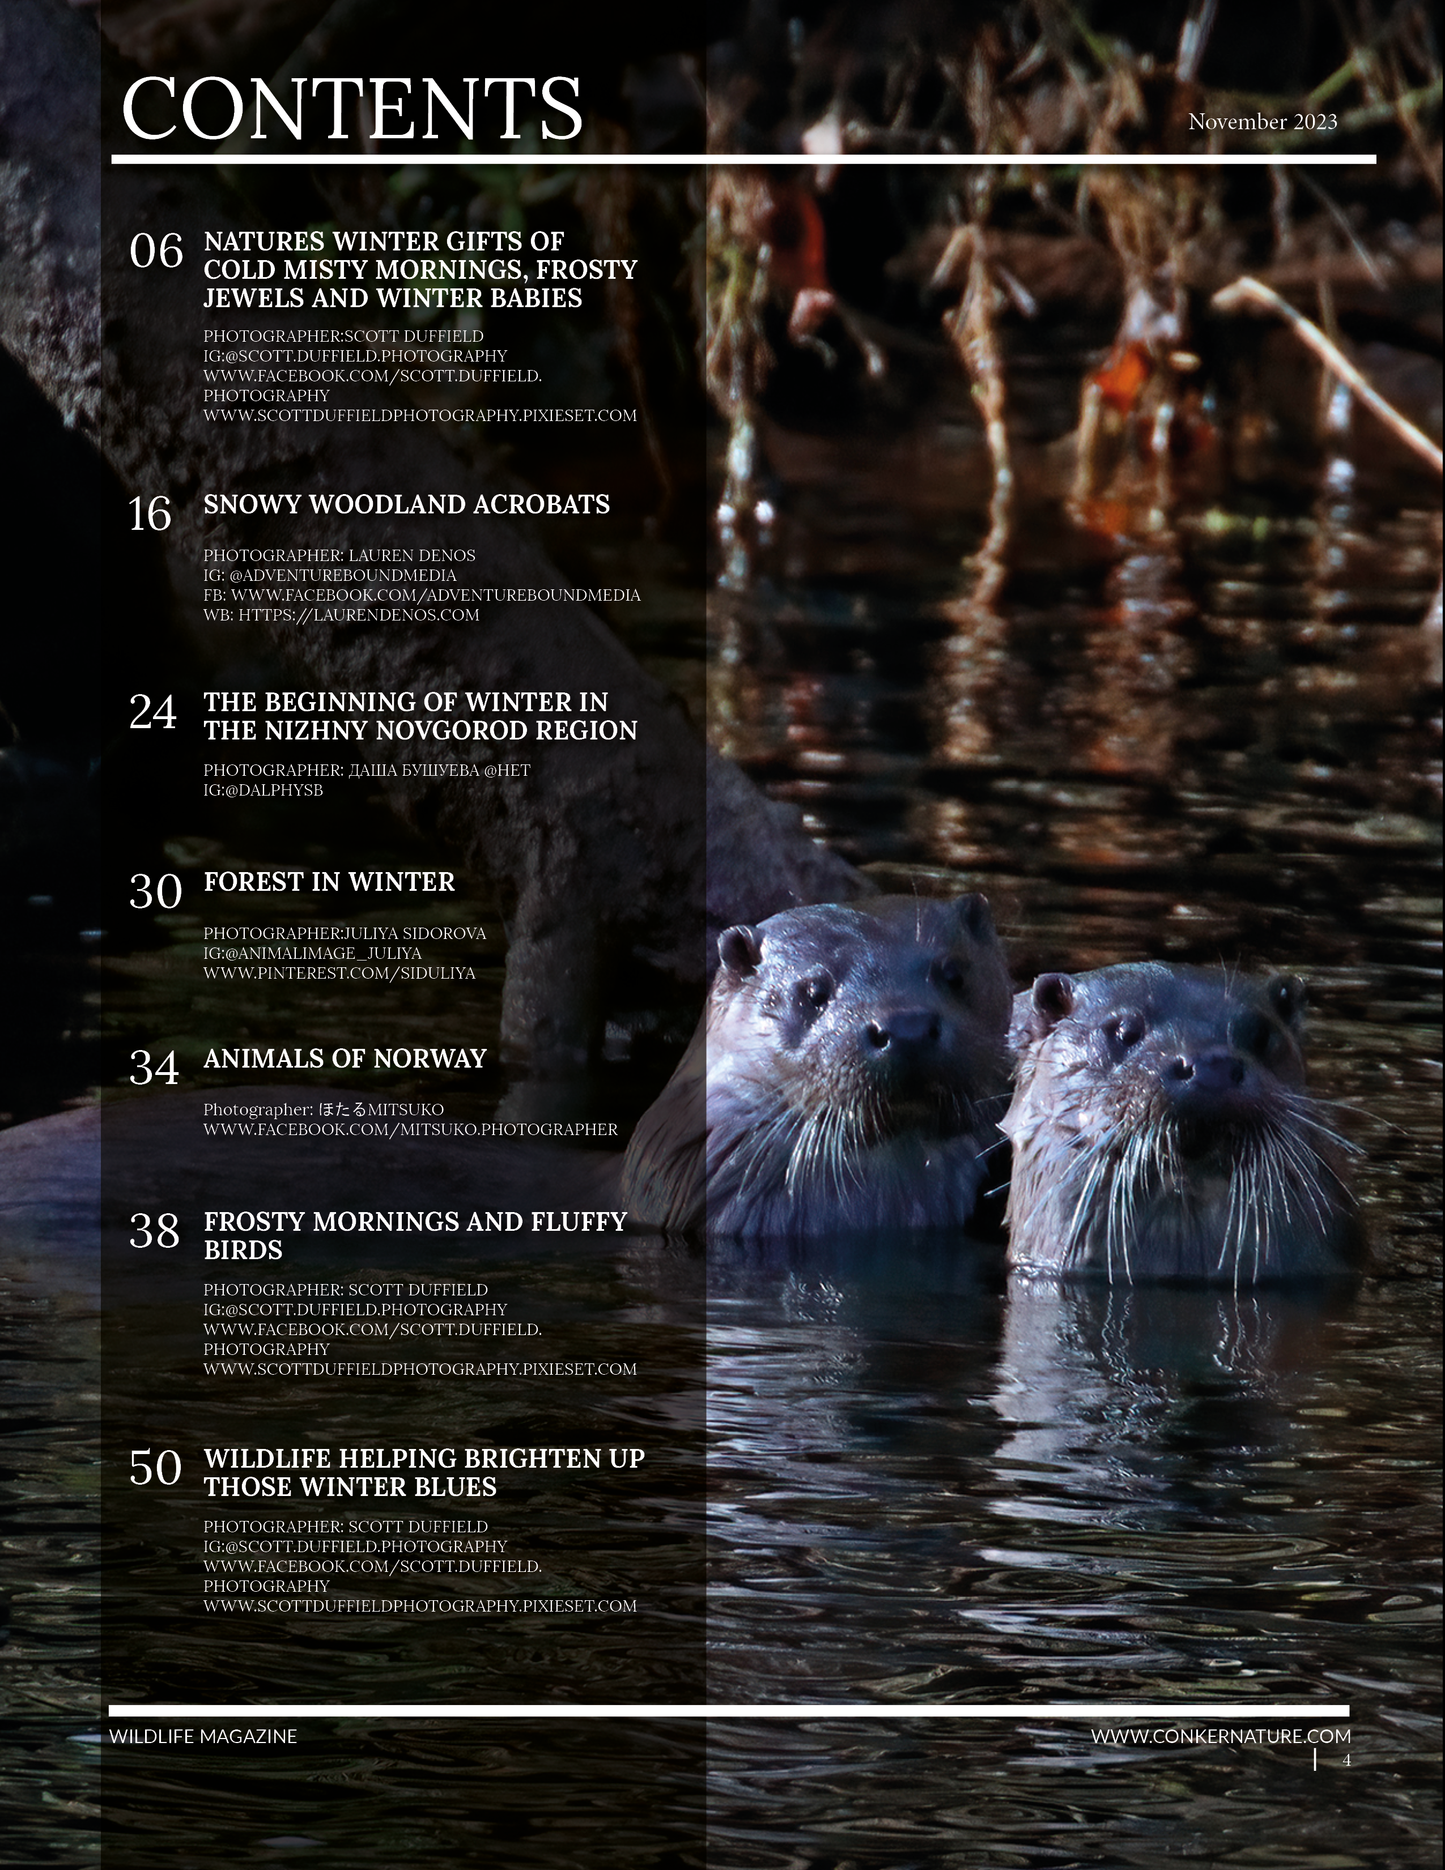 Conker Nature Magazine - November 2023: The Winter Wildlife Issue